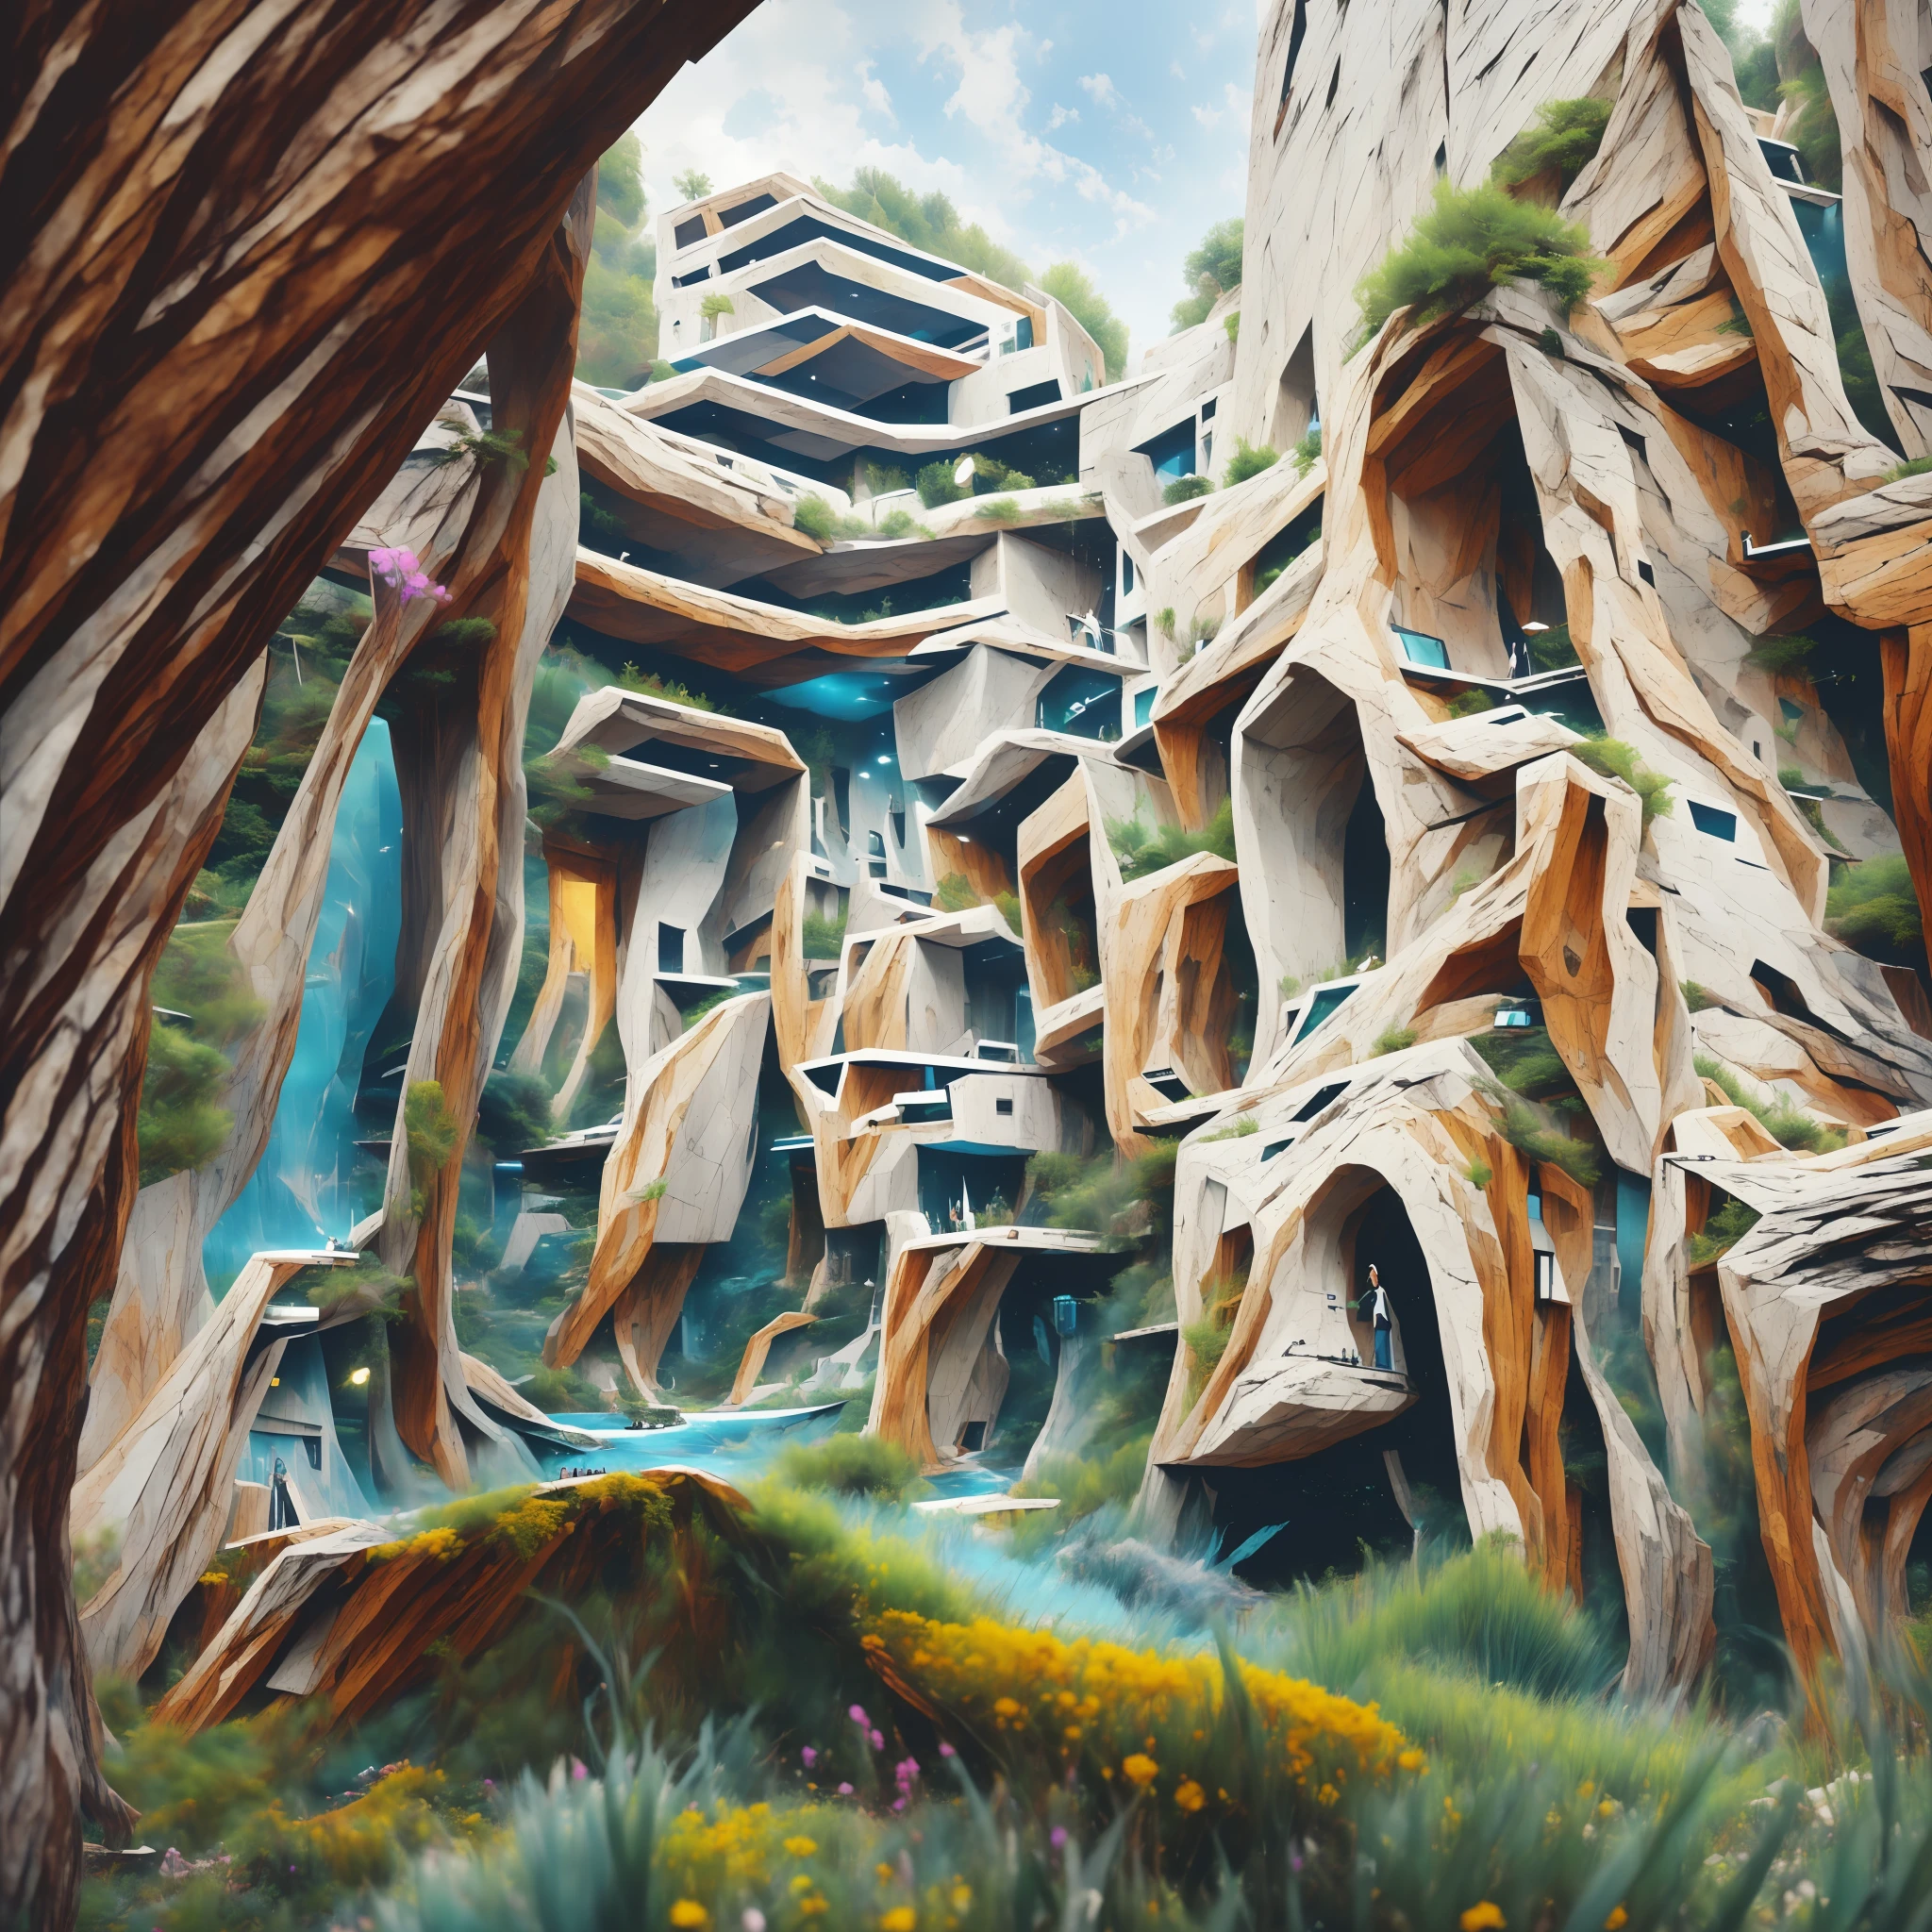 an awesome sunny cheerful day environment concept art of Futuristic design of cave architecture interiors concept art on grand Canyon caves 自然建築, 成比例的,詳細的, 洞穴建築自然與未來建築在熱帶雨林叢林懸崖上的巨大瀑布相遇,暮光之光, 大自然與牡羊座莫羅斯風格的現代建築相遇, 雷姆·庫哈斯,丹尼爾·裡伯斯金德, 讓·努維爾, 保羅·索萊裡,伊東豐雄和菲利普·約翰遜的乾筆繪畫風格 ,明暗對比村,懸崖邊住宅區, 混合發展,自然建築,鮮豔的色彩,高層建築樓梯, 阳台, 充滿玻璃帷幕牆,由岩石雕刻而成, 傑作, 成比例的, 詳細的, ArtStation 上的熱門話題, 美麗的燈光, 實際的, 錯綜複雜